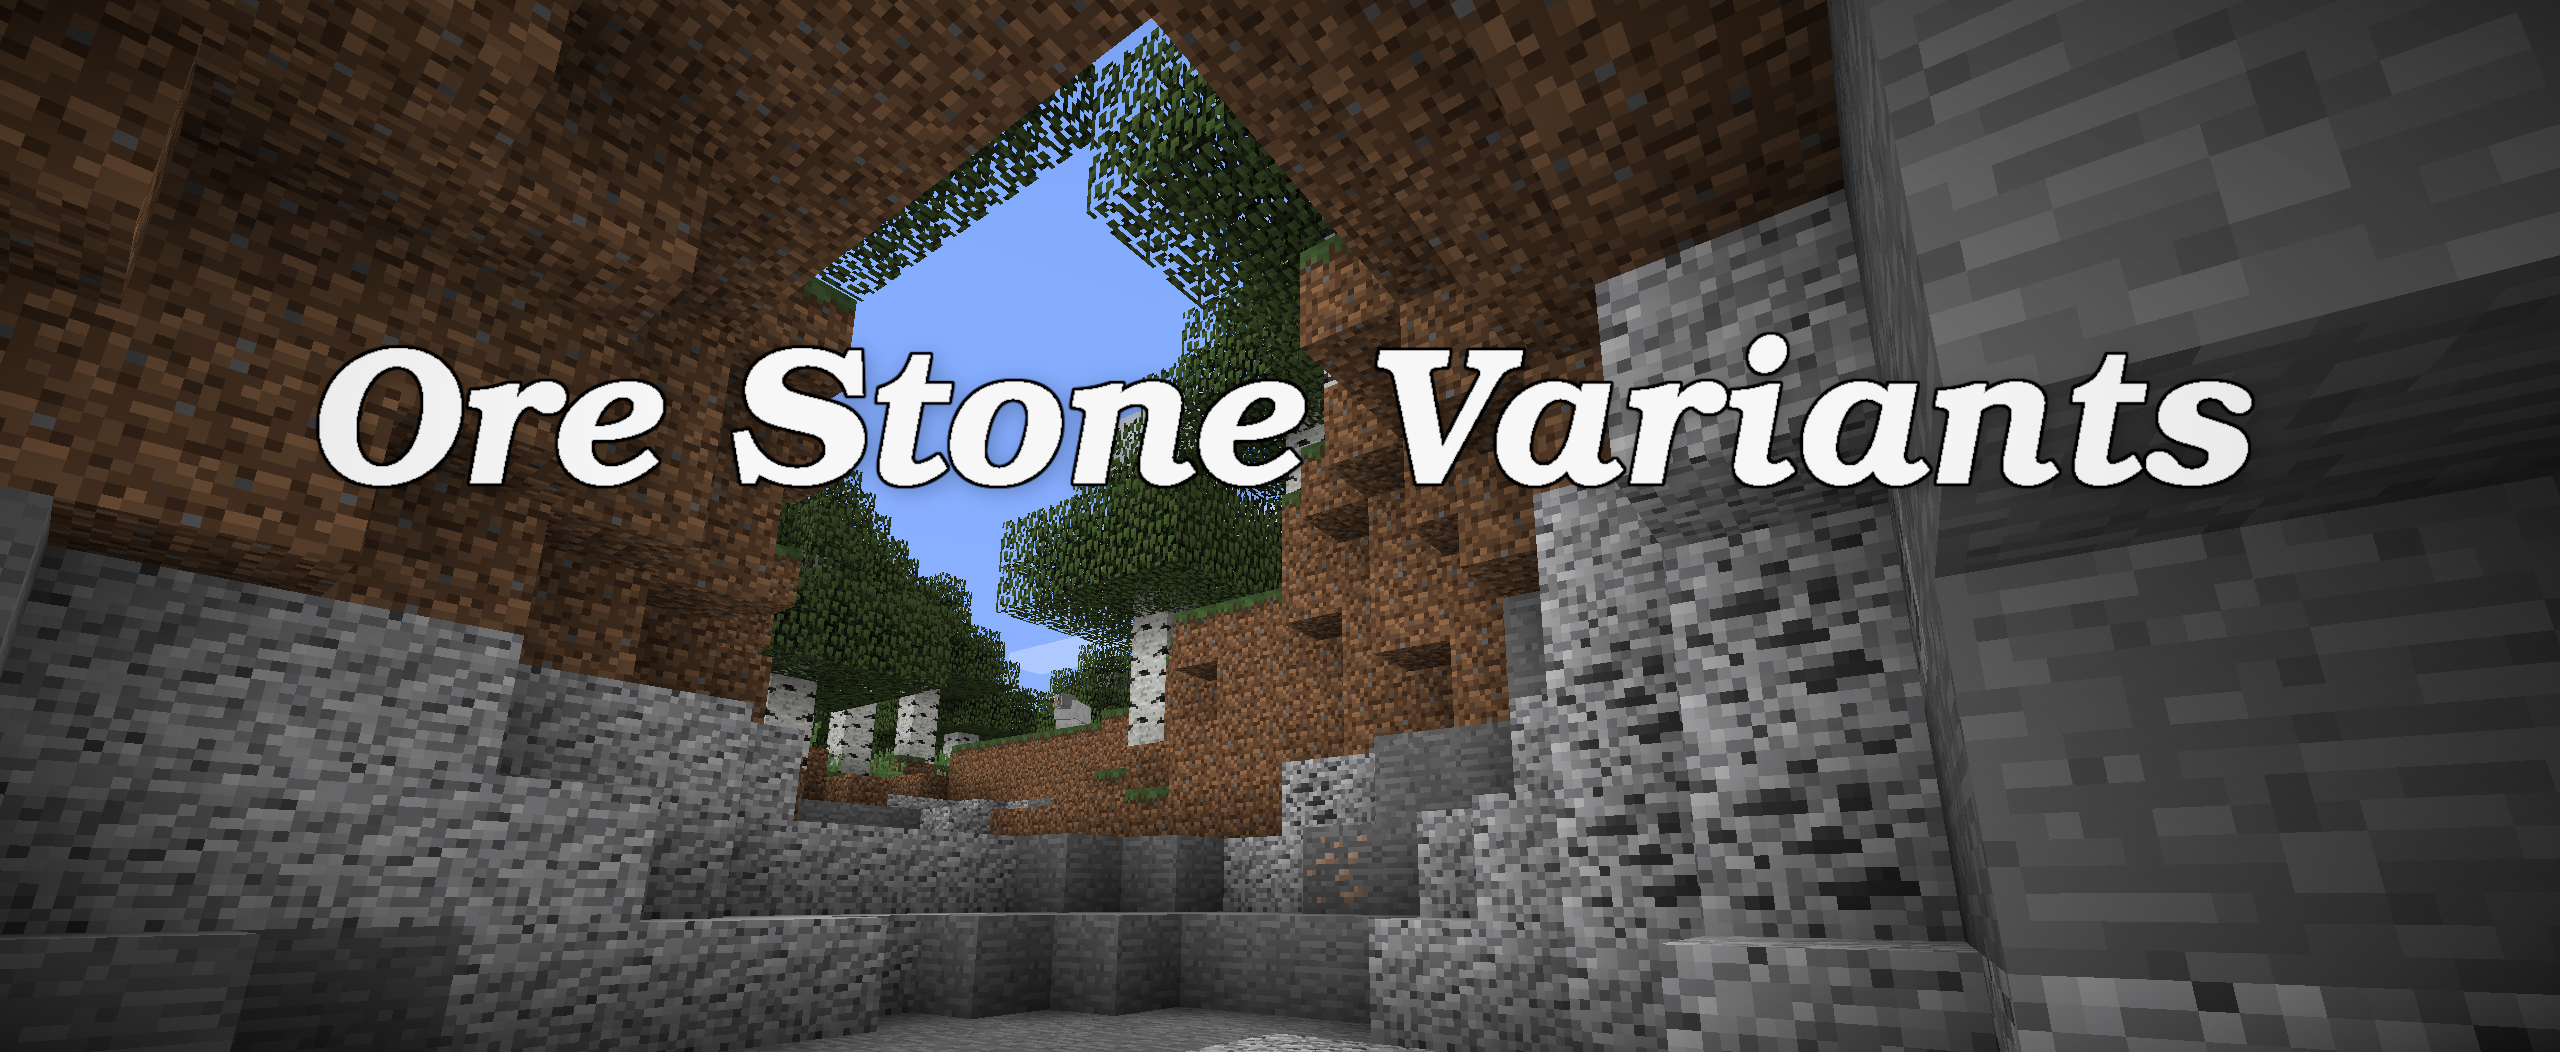 Ore Stone Variants screenshot 1